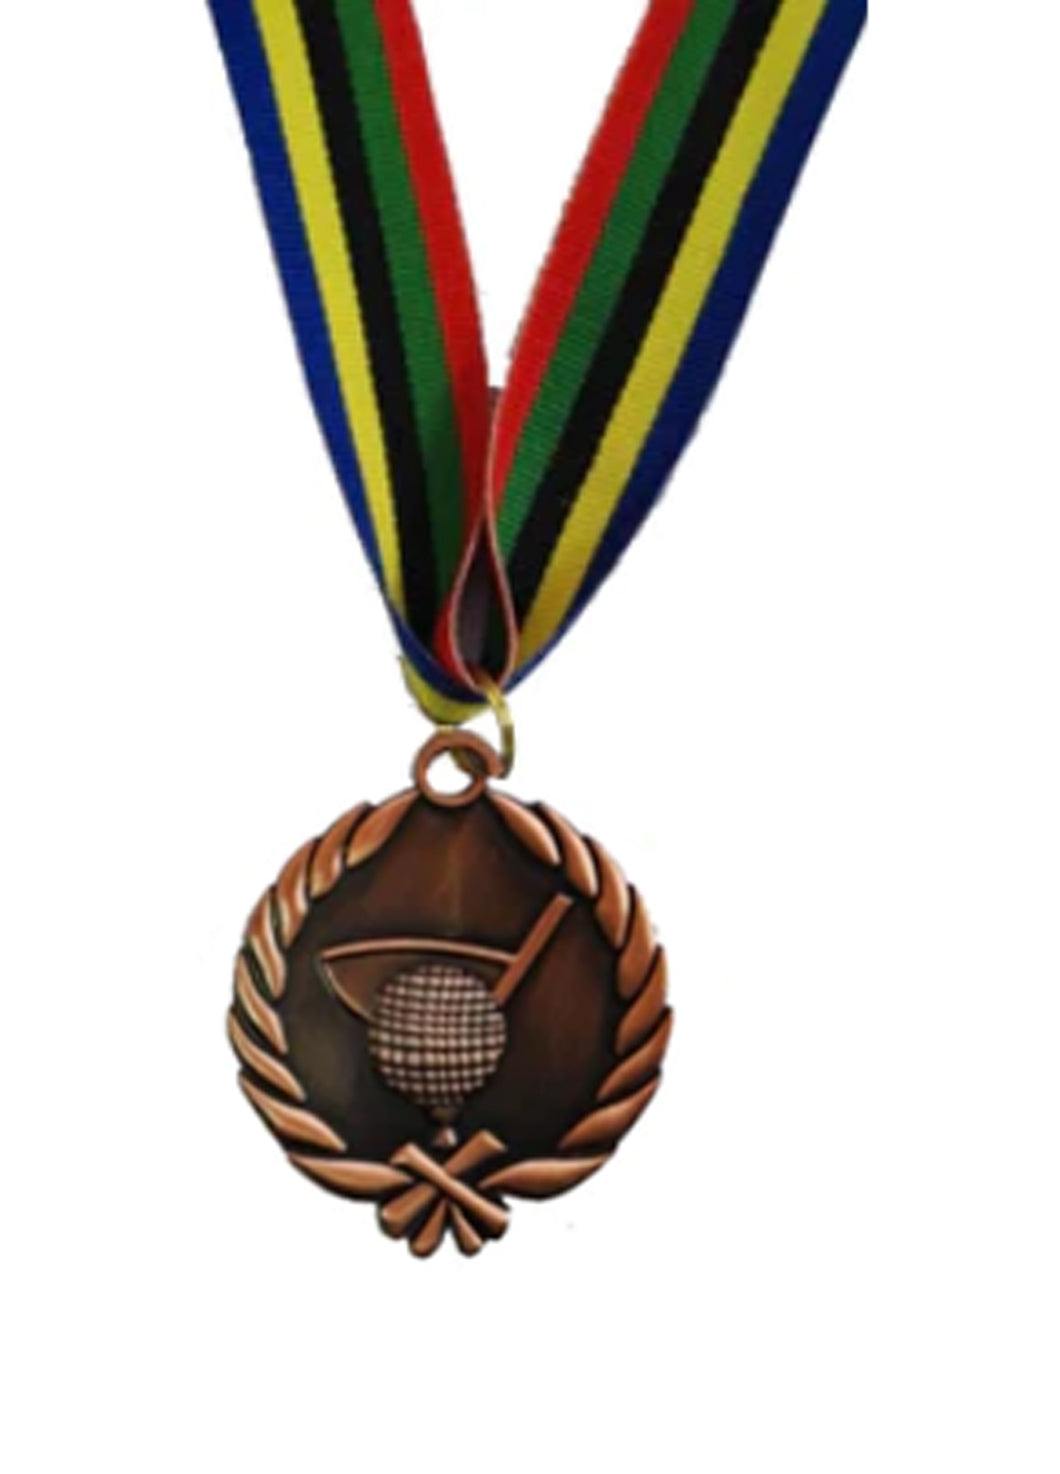 M41S BRONZE Medal